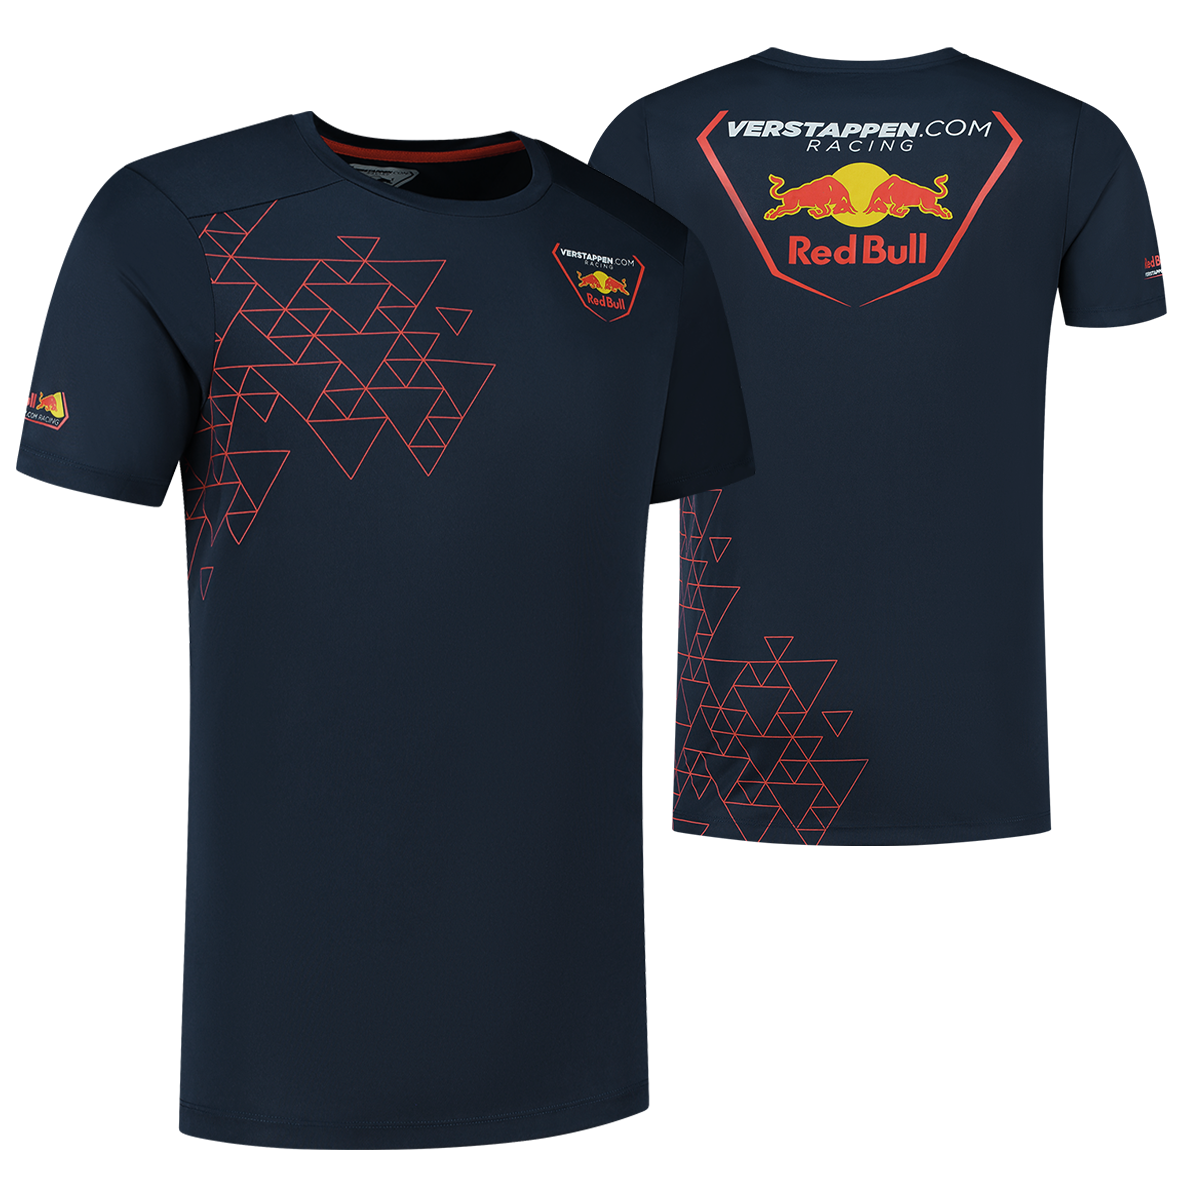 Verstappen.com Racing T-shirt - S - Max Verstappen